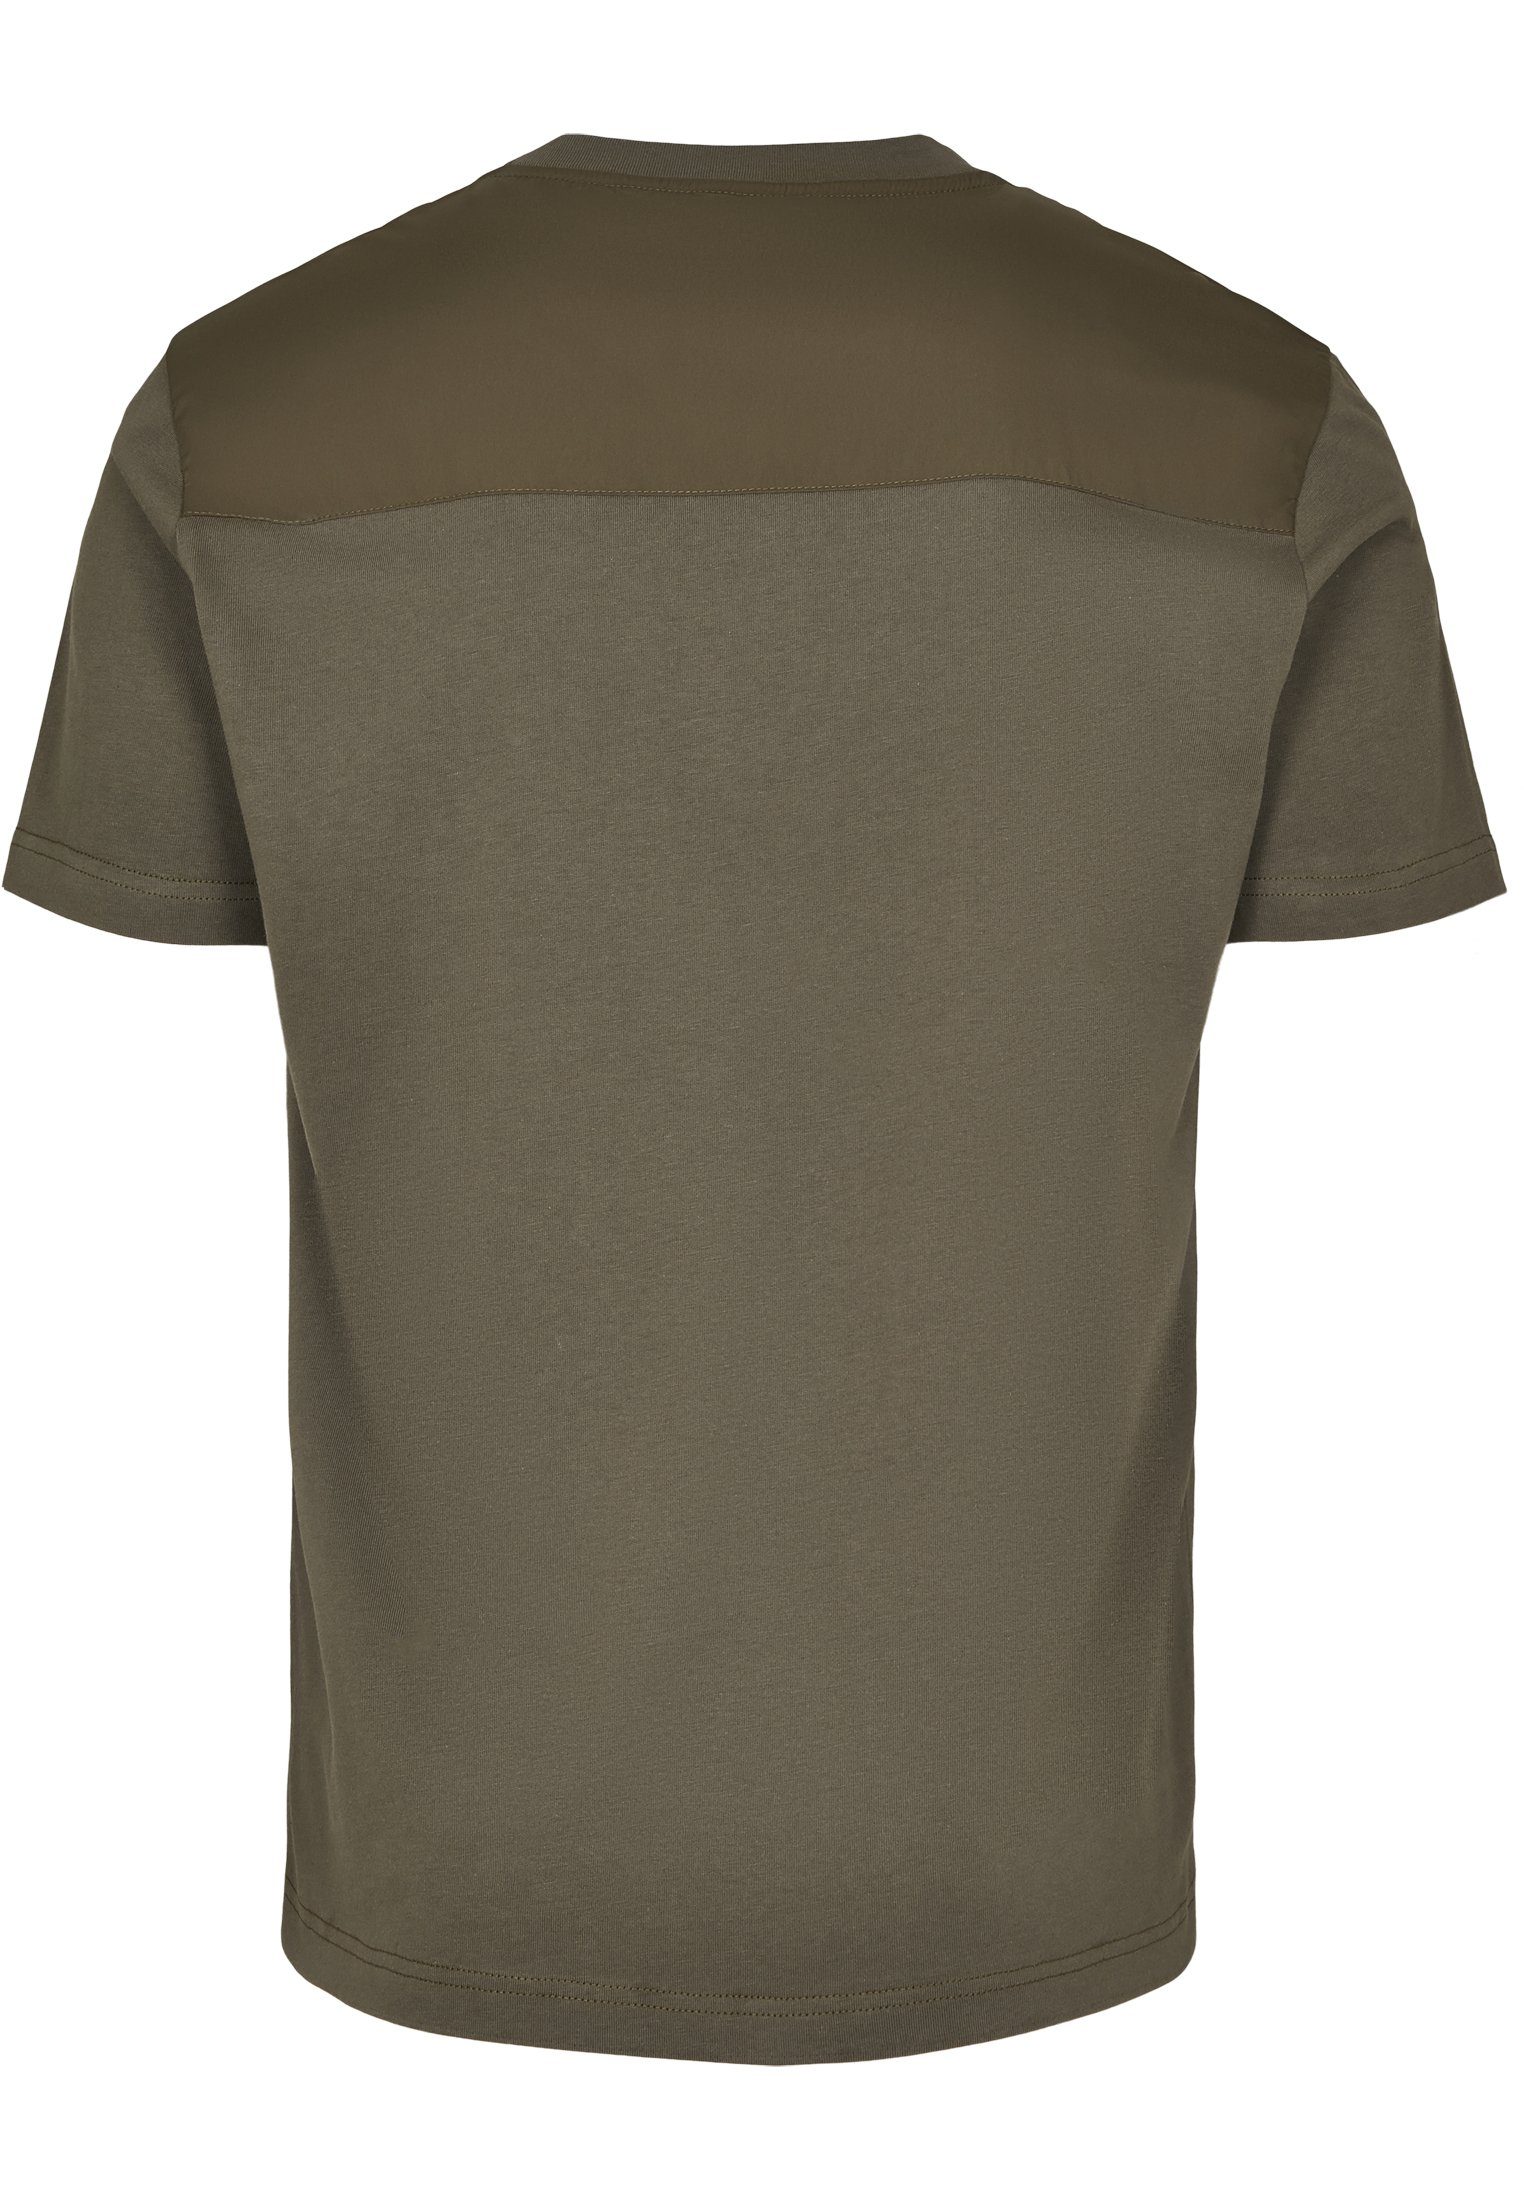 (1-tlg) TB3106 Kurzarmshirt Military URBAN olive CLASSICS T-Shirt Tee Military